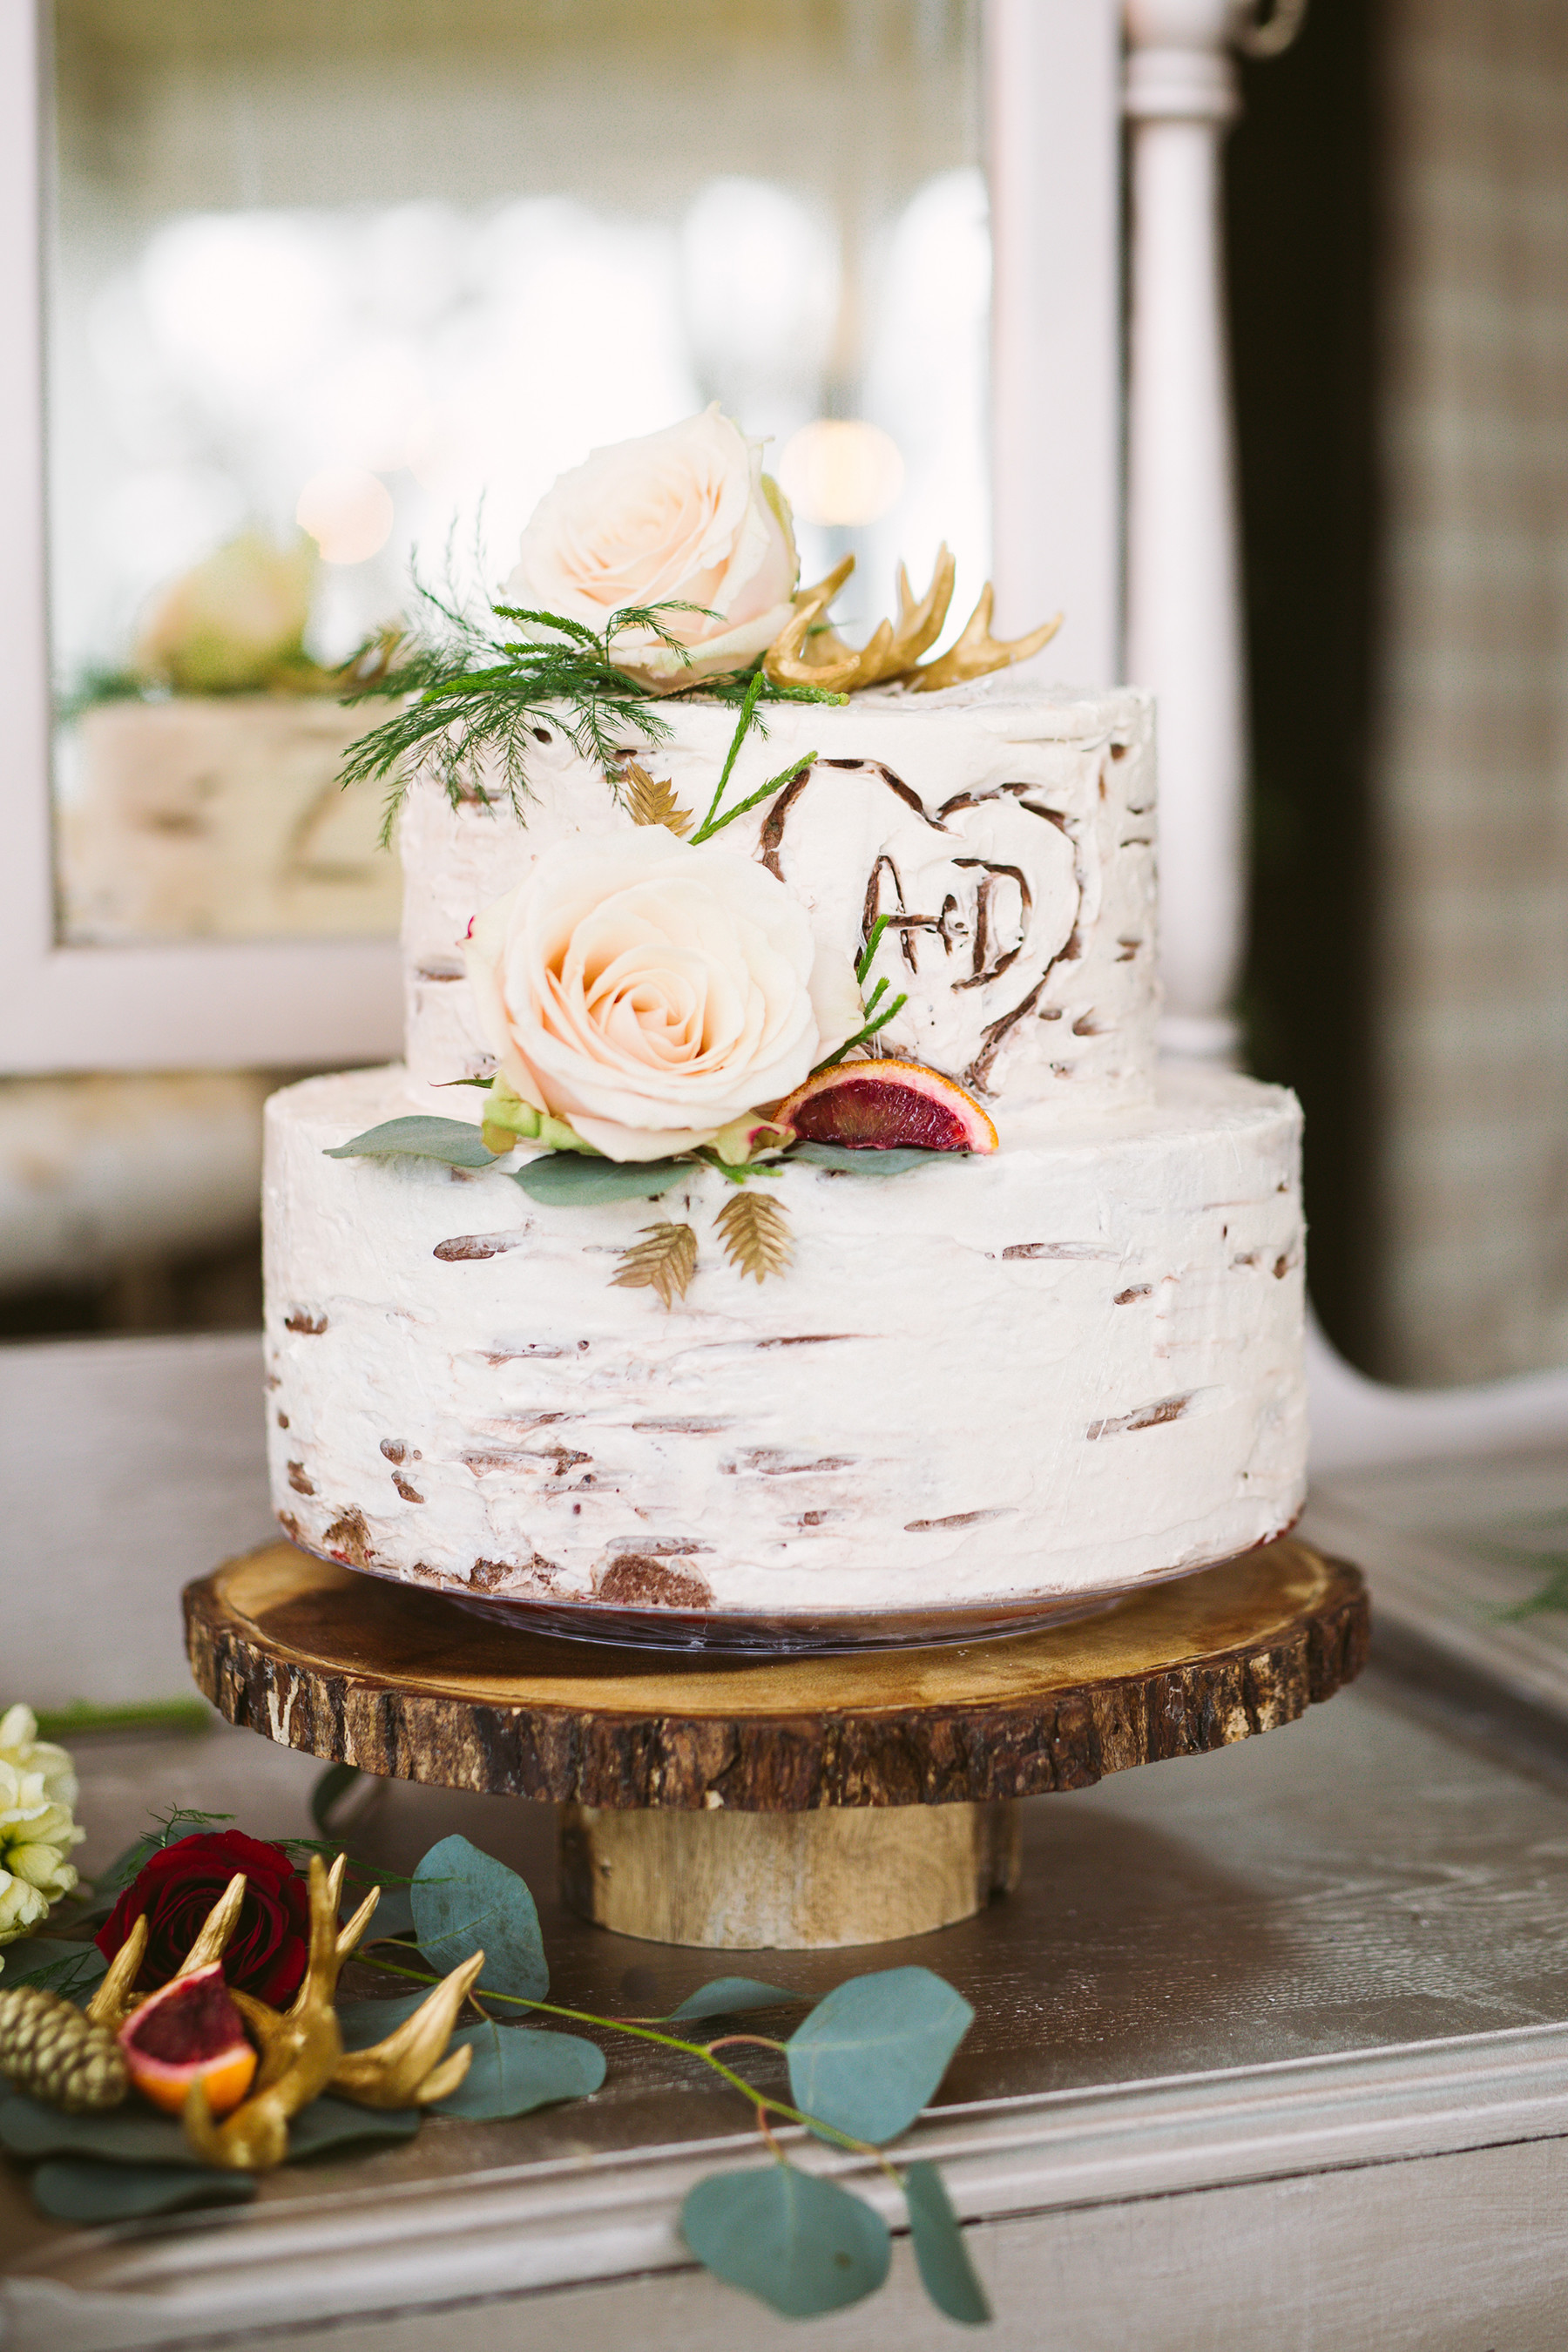 52 Small Wedding Cakes with a Big Presence | Martha ...